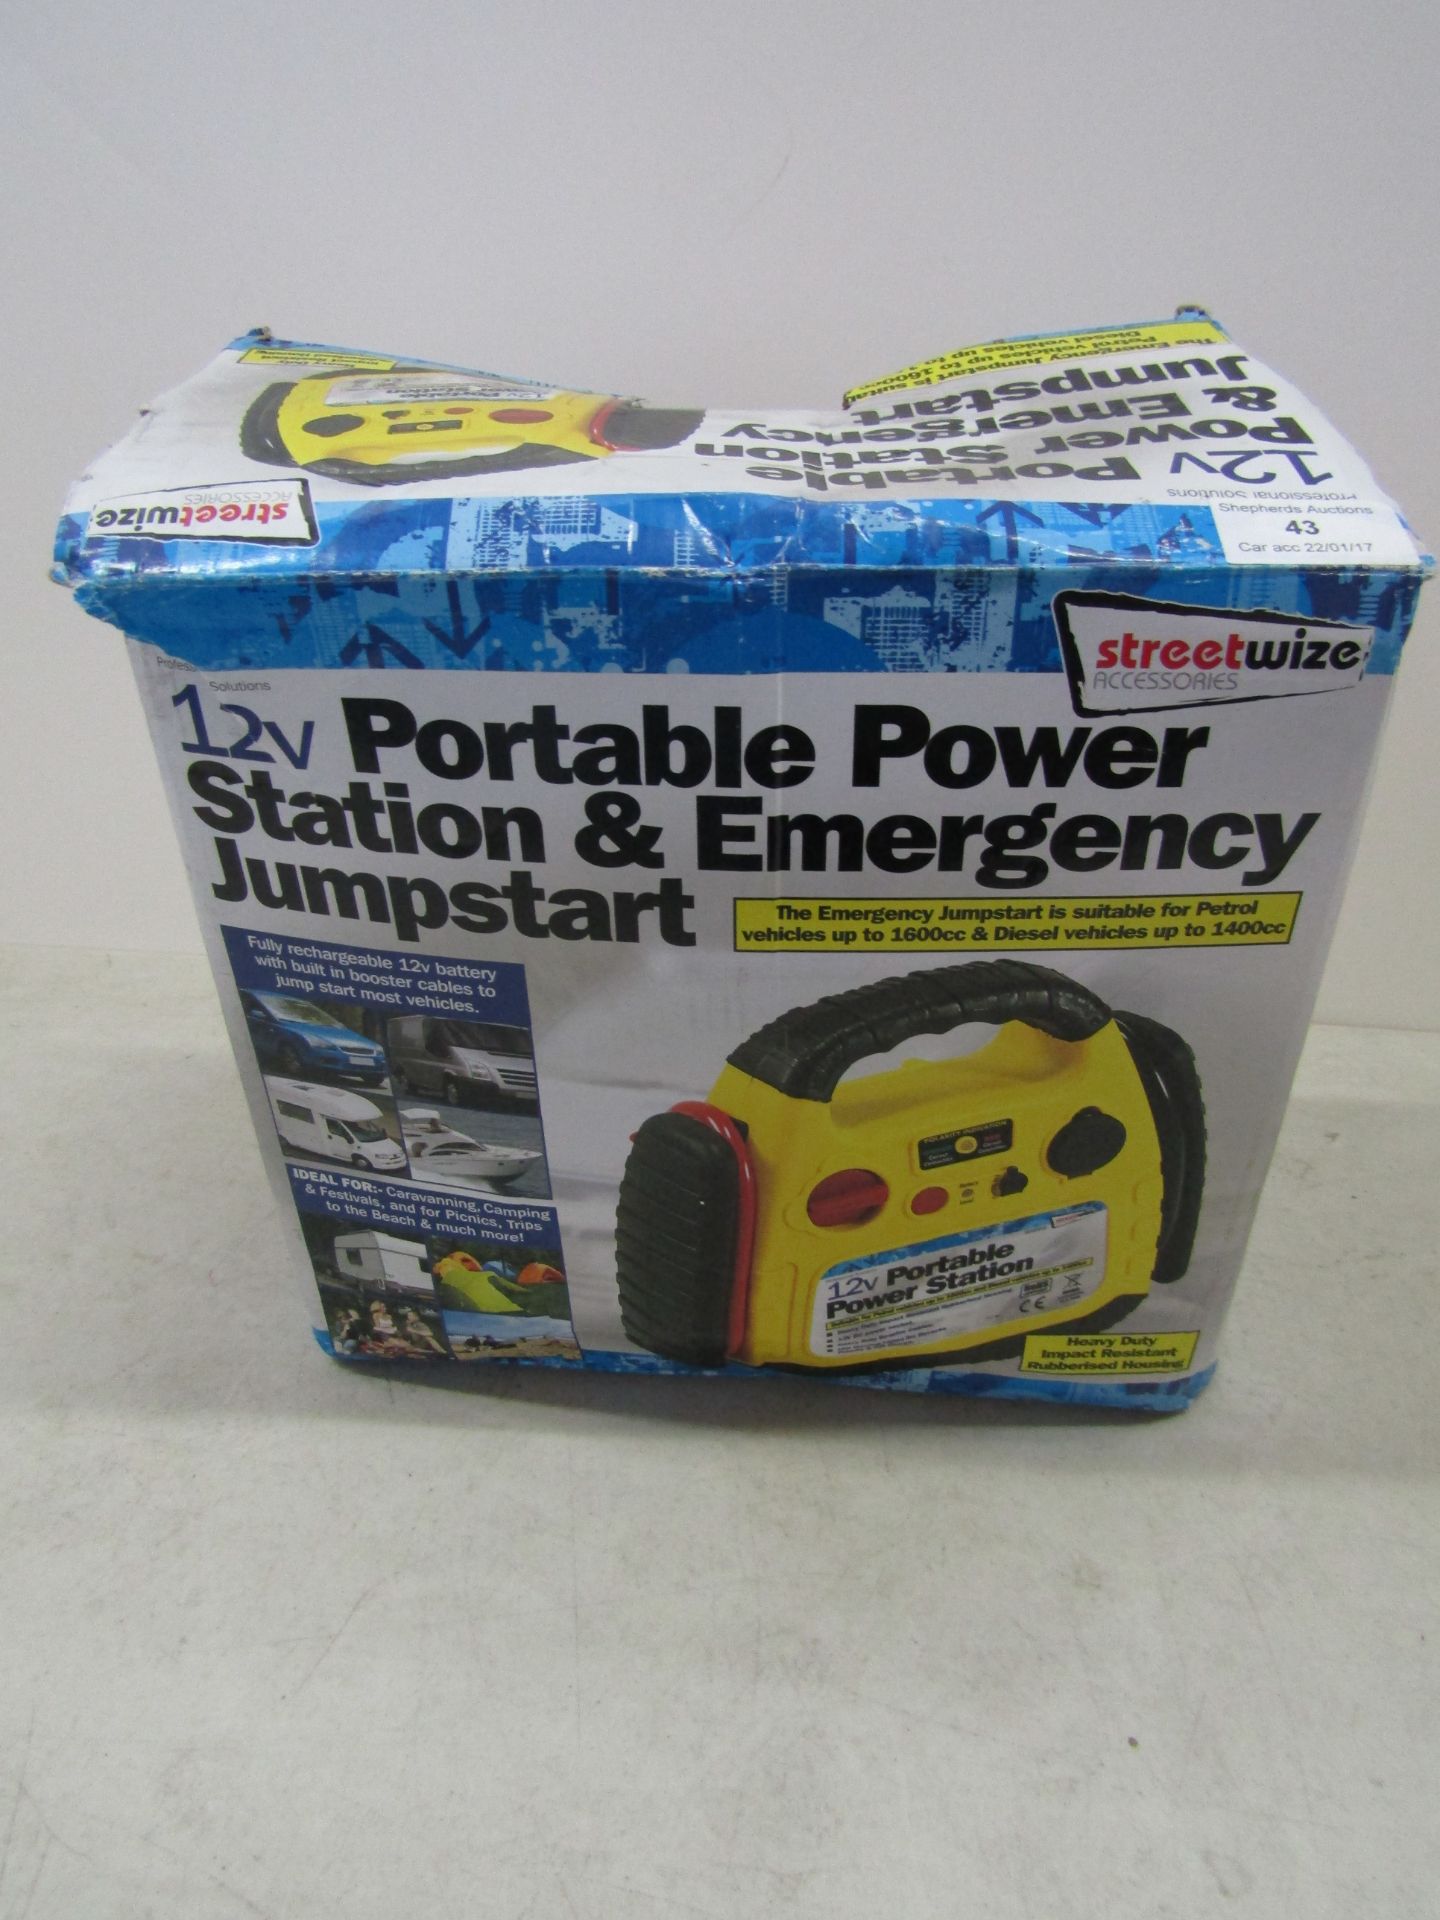 12V Portable power station & emergency jumpstart unit, unused, unopened and boxed.